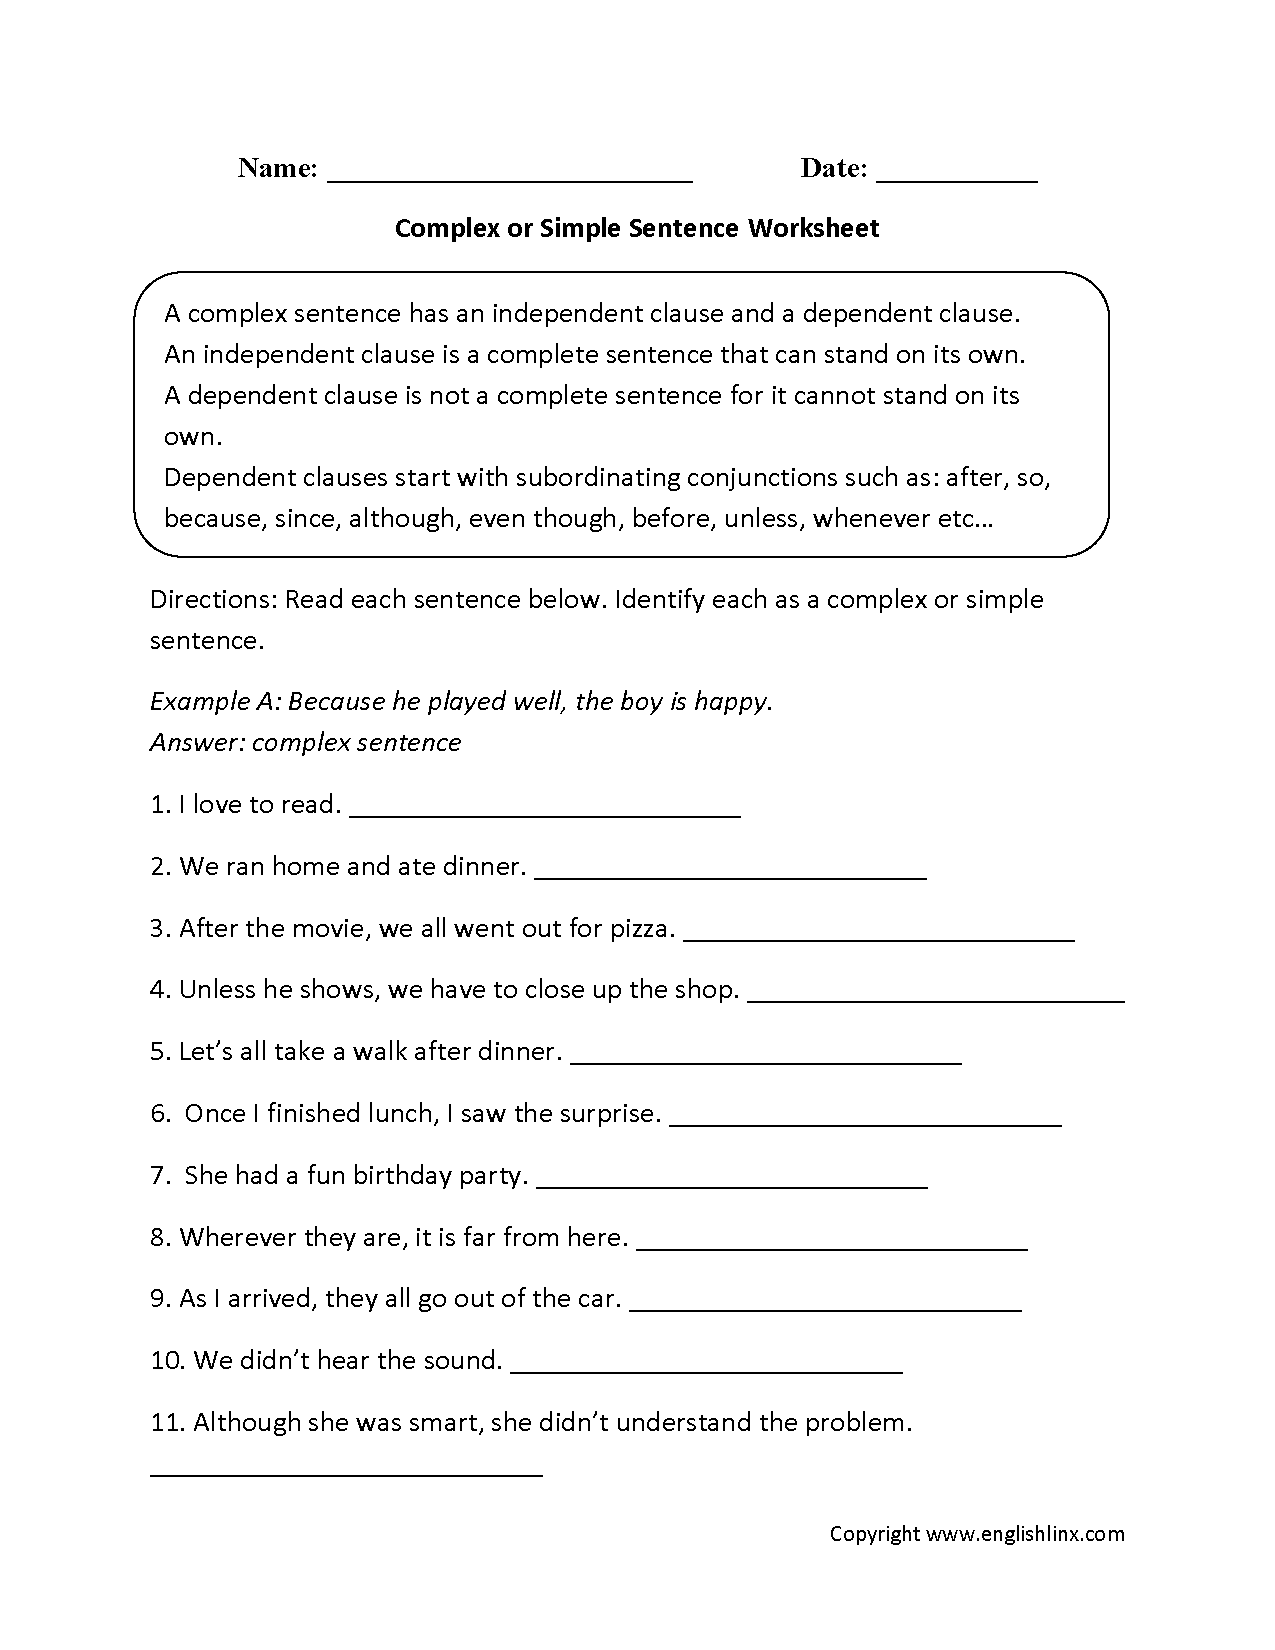 Complex Or Simple Sentences Worksheet Mona Free Worksheets Samples, Simple